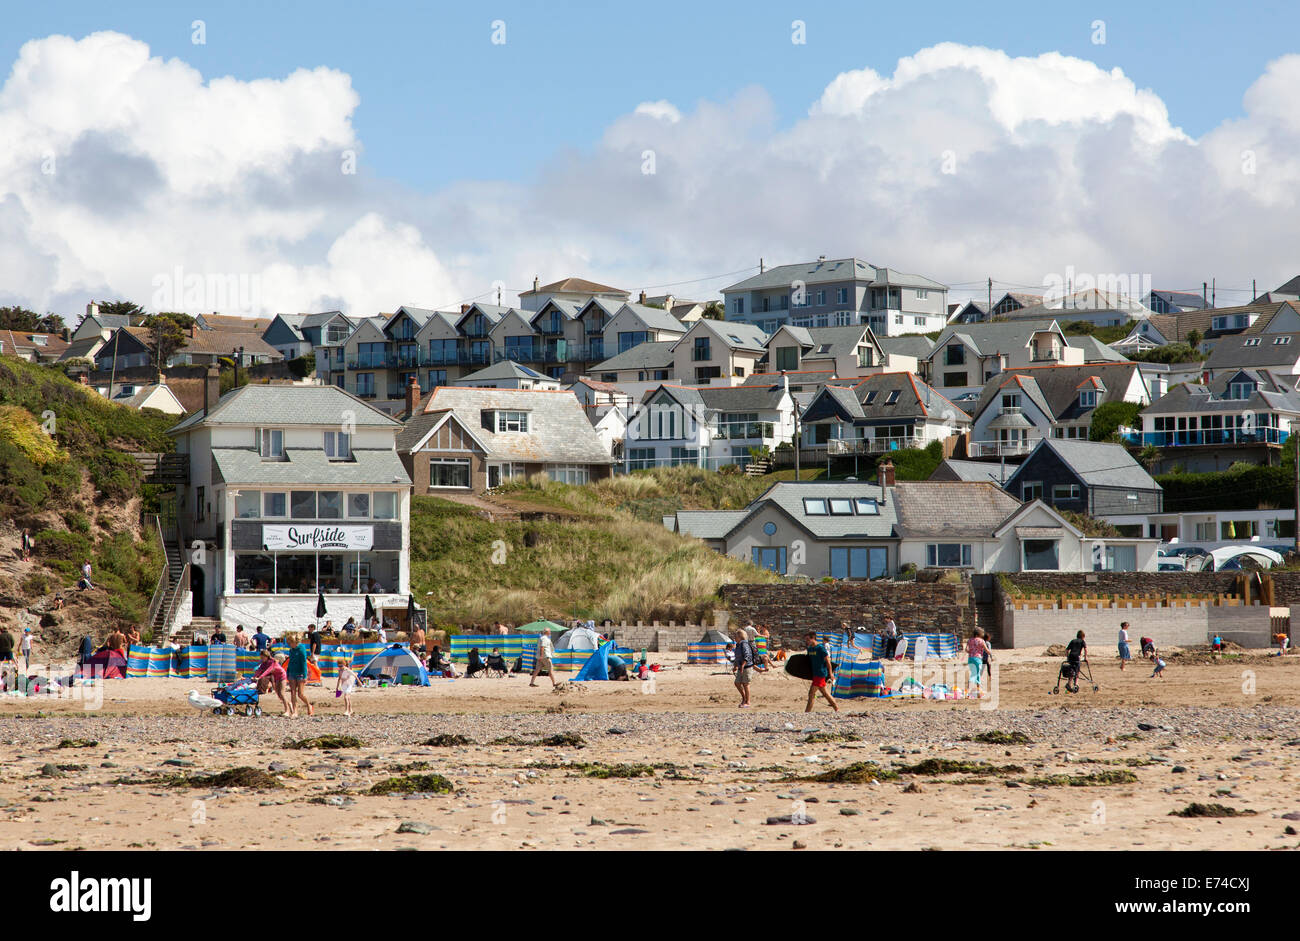 Holiday homes overlooking the beach at Polzeath, Cornwall, U.K. Stock Photo